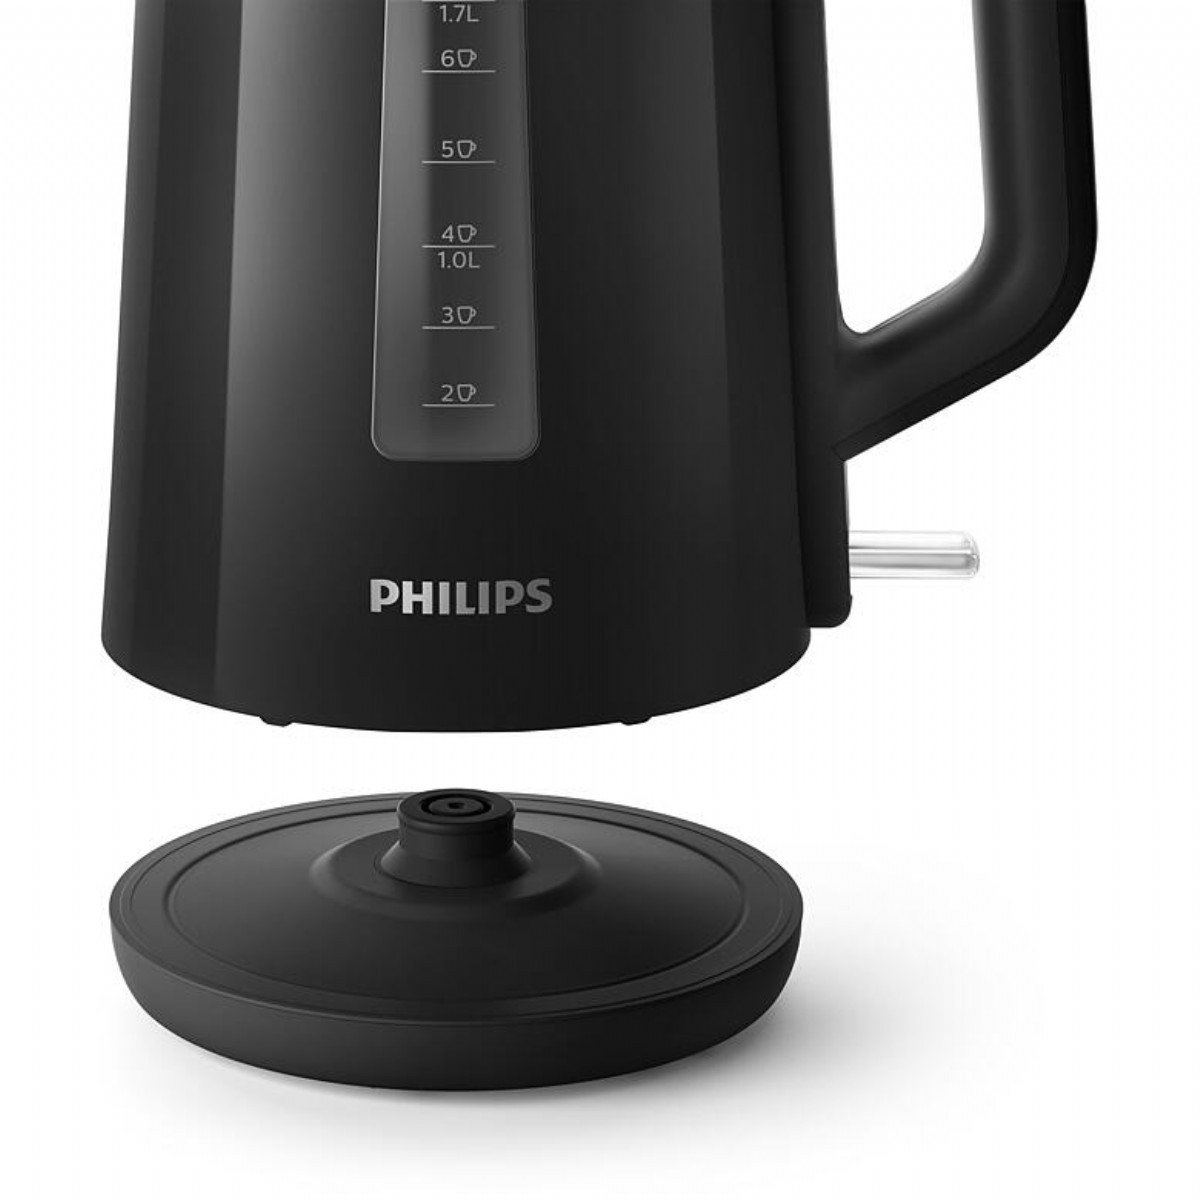 Kettle-Su Isıtıcı | Philips HD9318/20 Su Isıtıcısı | HD9318/20 | hd9318/20, HD9318, HD9318/20, philips, philips su ısıtıcı, kettle, philips kettle, Philips HD9318 Su Isıtıcı, Philips HD9318 | 